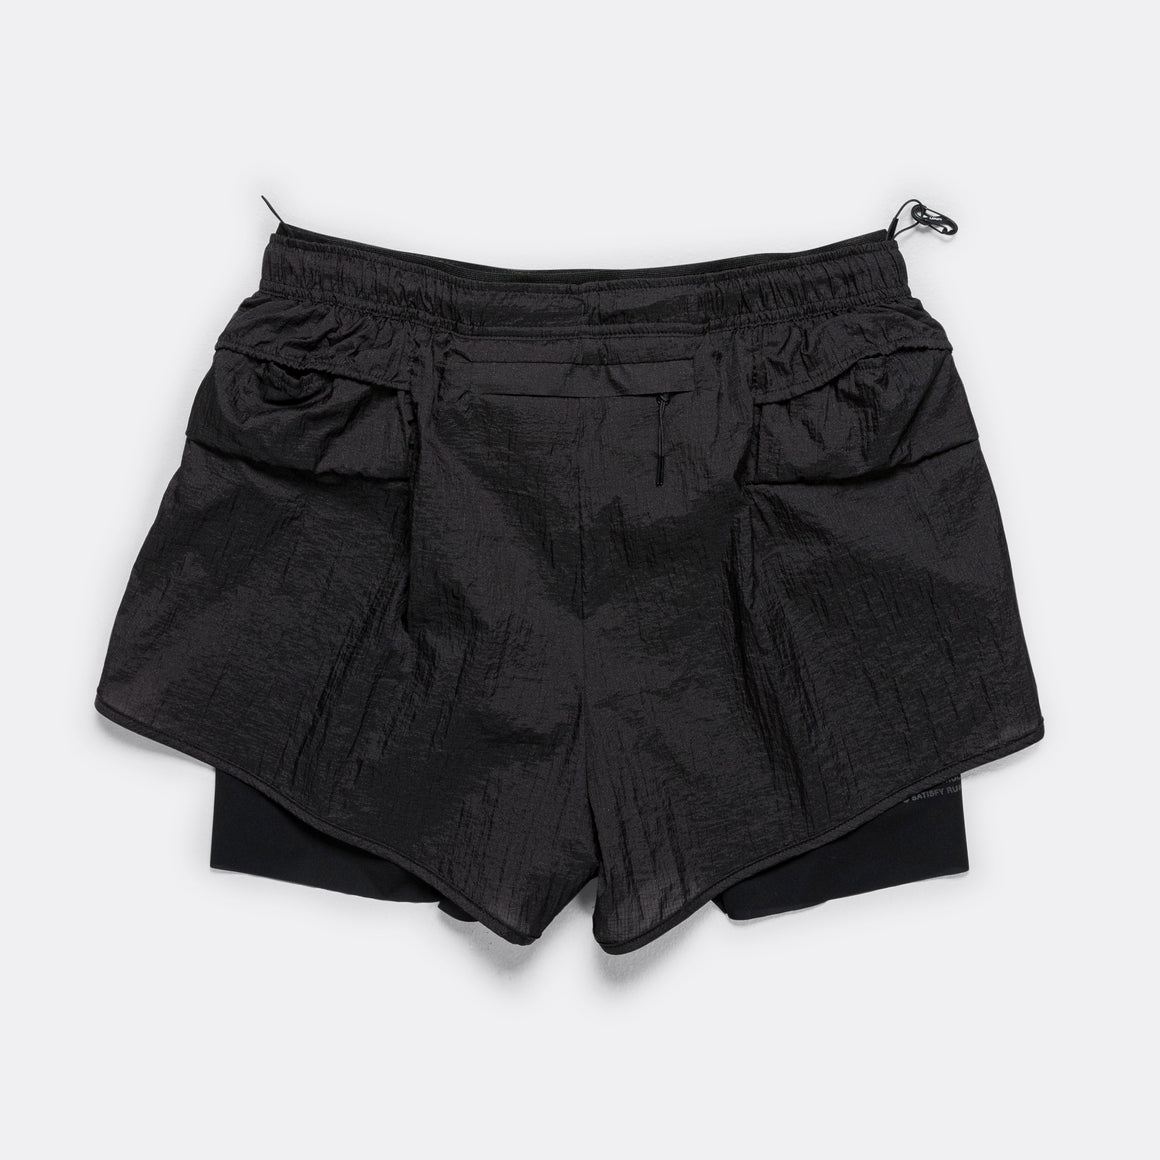 Rippy™ 3 Trail Shorts - Black/Black